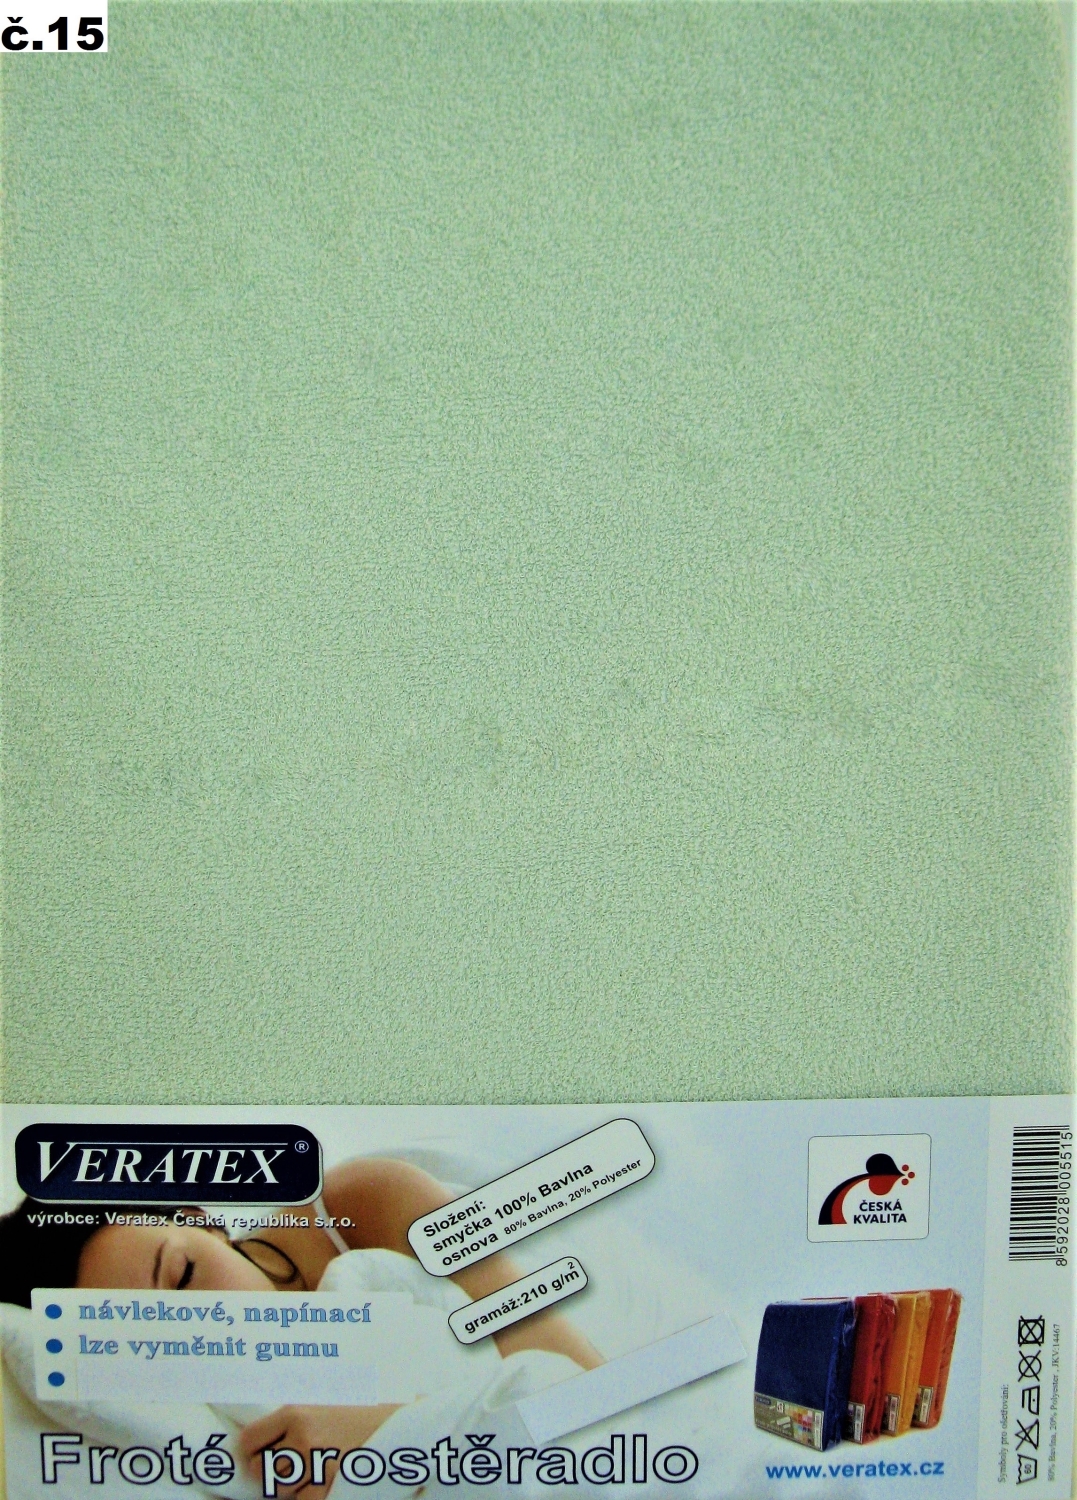 Veratex Froté prostěradlo 100x220/16 cm (č.15 sv.zelená) 100 x 220 cm